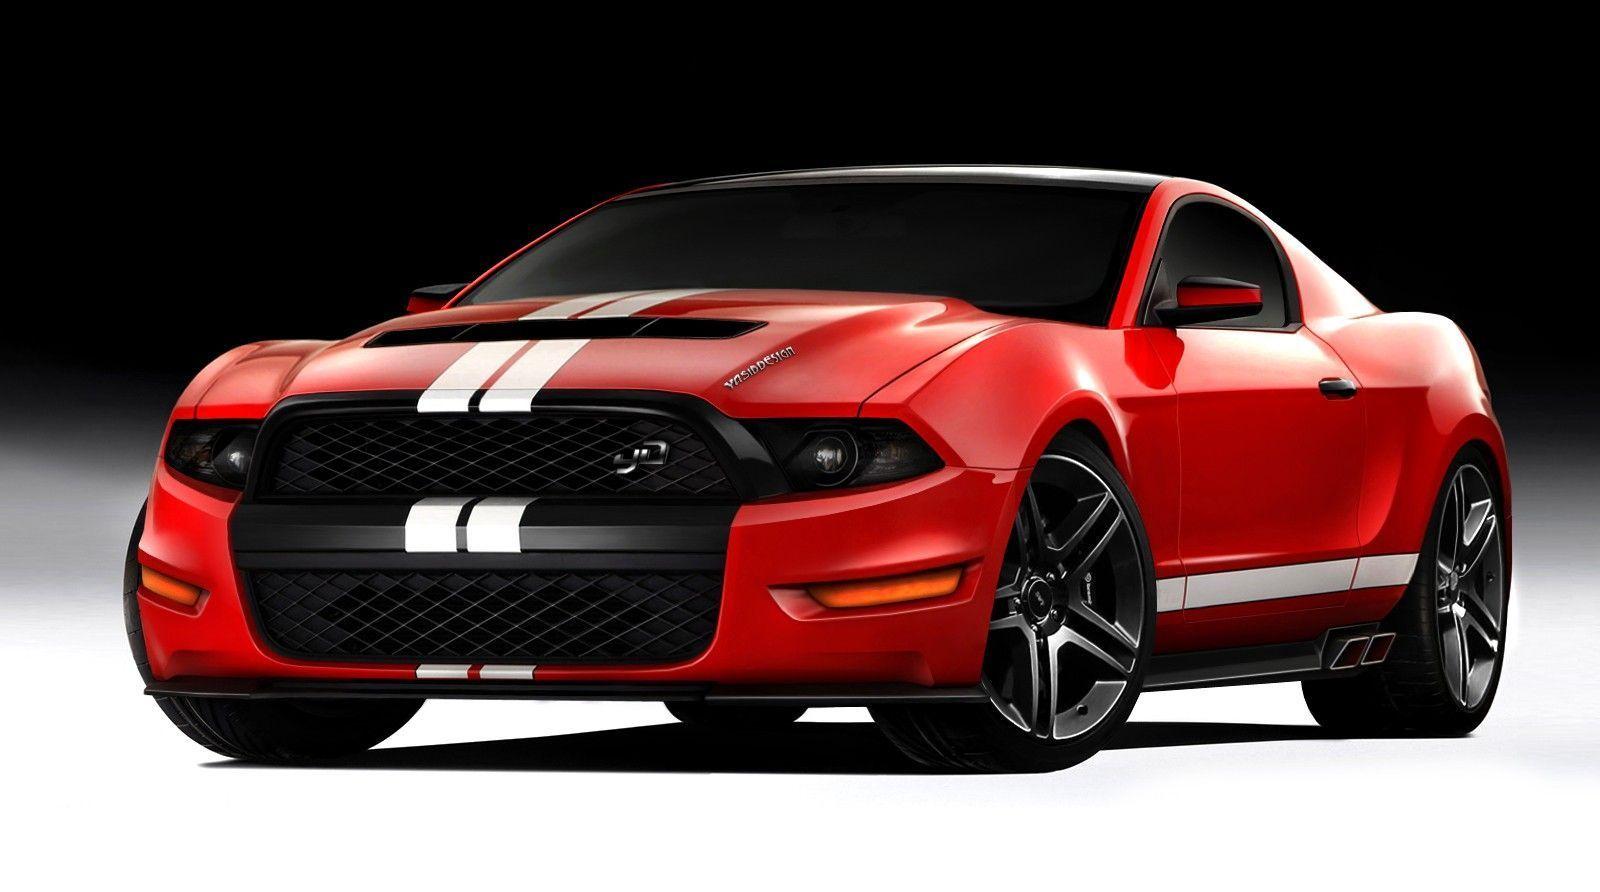 Vehicle: 2014 Ford Mustang GT HD Wallpaper, cars wallpaper HD